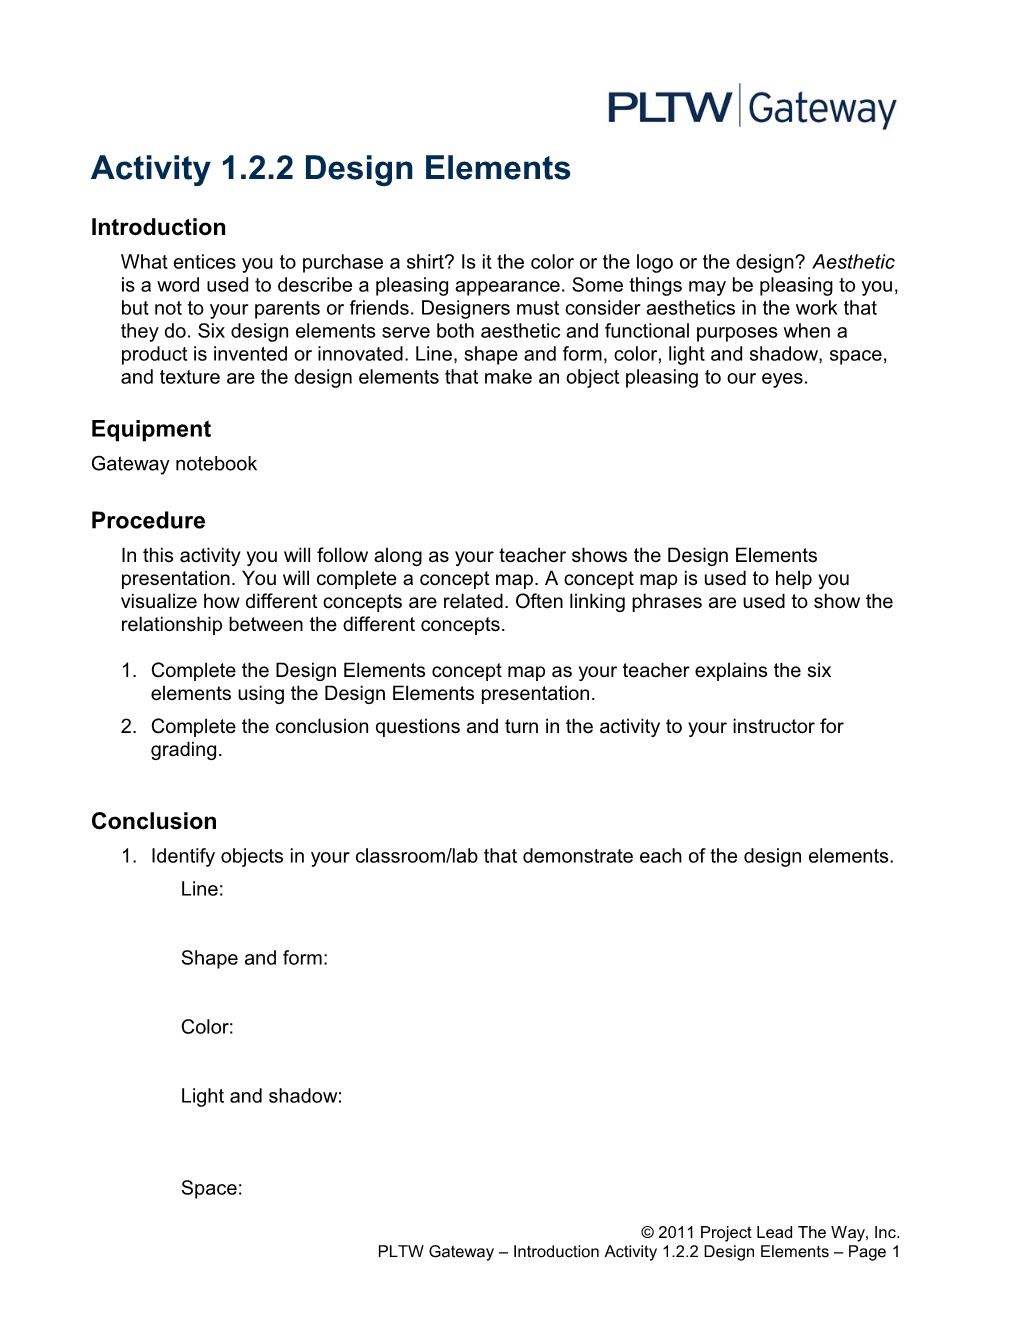 Activity 1.2.2 Design Elements